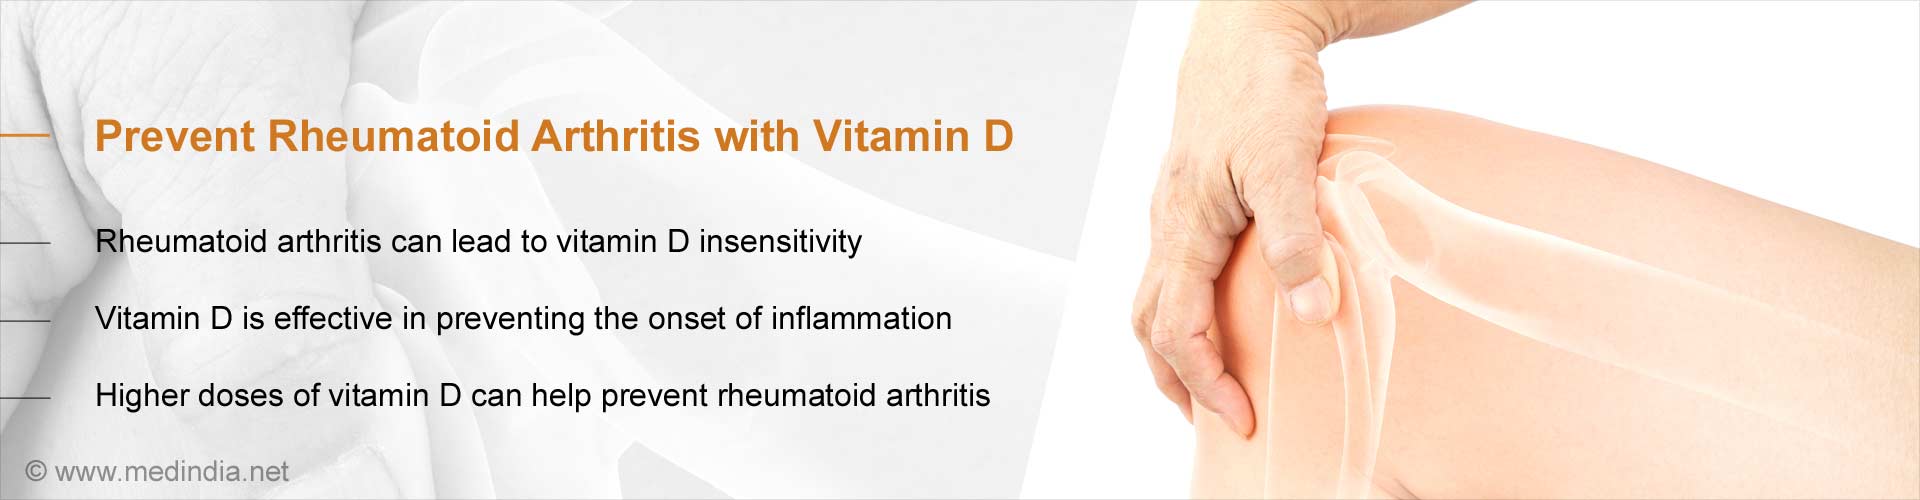 Vitamin D Helps Prevent Rheumatoid Arthritis